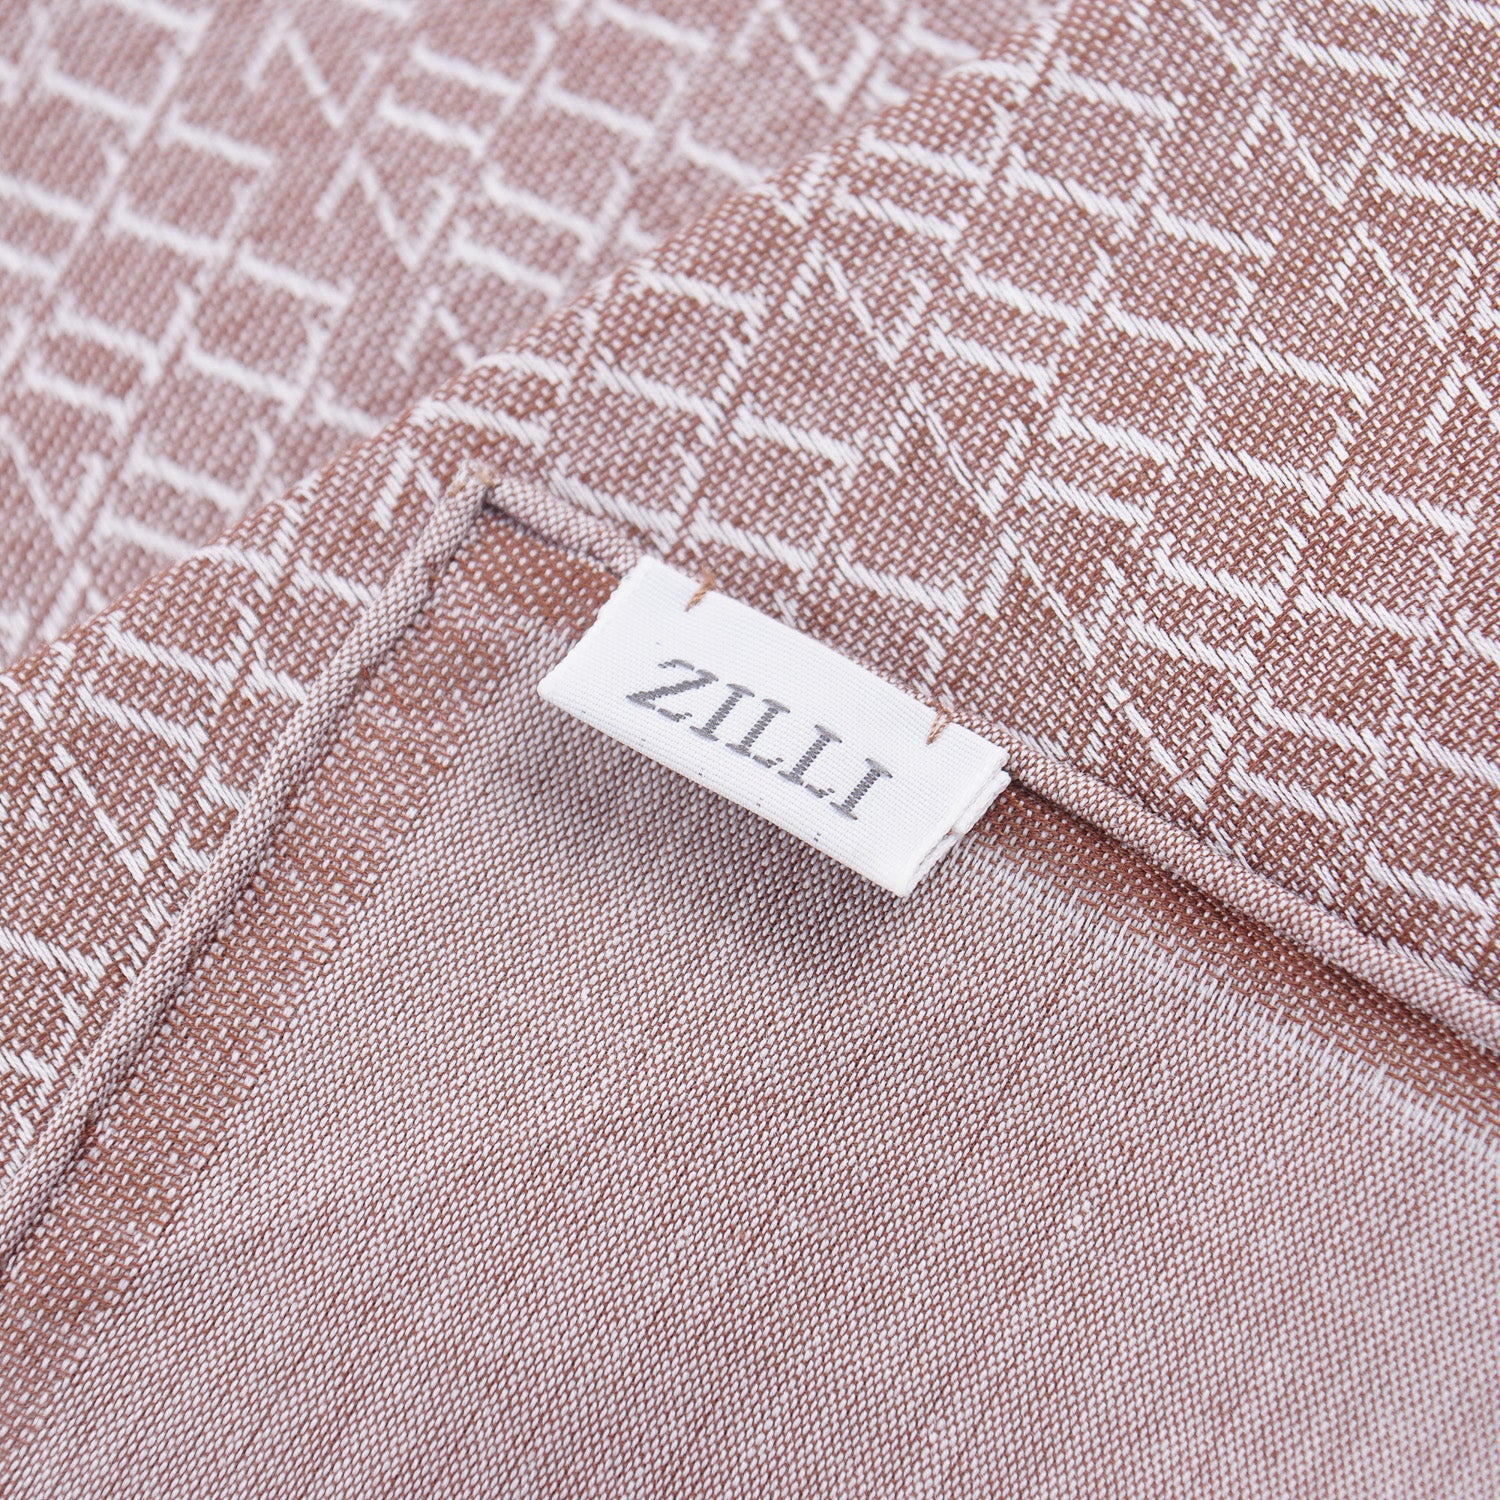 Zilli Lightweight Cotton Pocket Square - Top Shelf Apparel